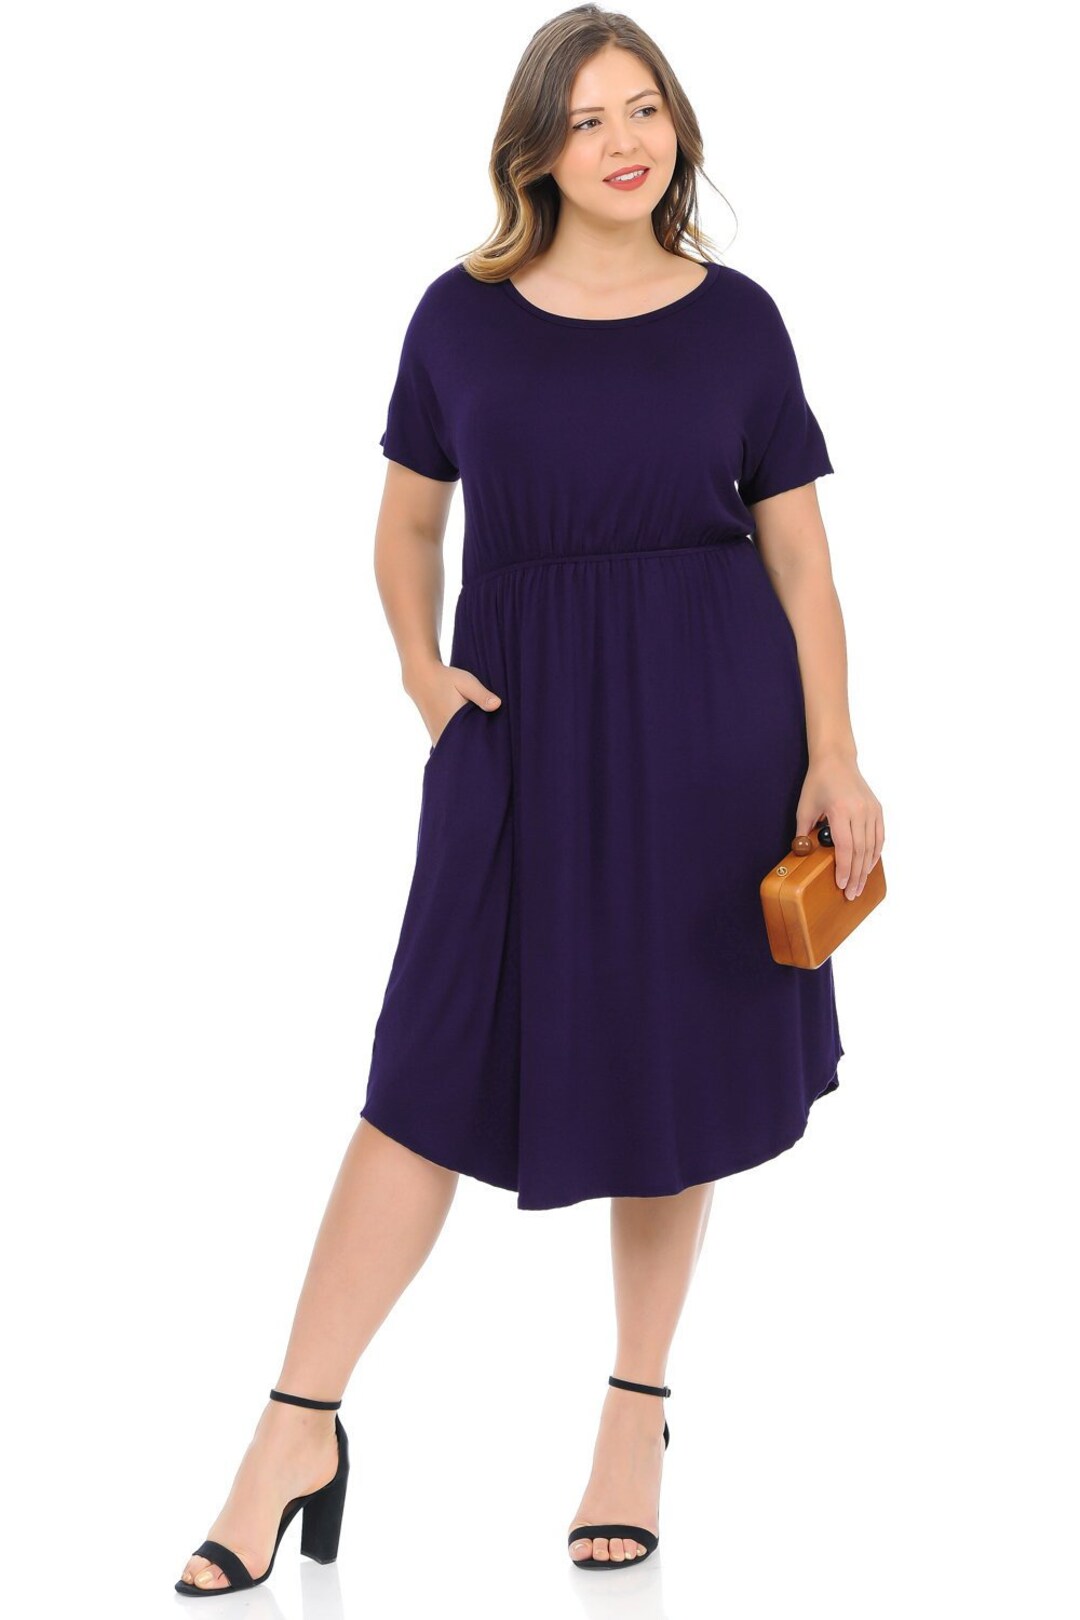 Plus Size Midi Dress With Pockets and Elastic Waist Eggplant - Etsy